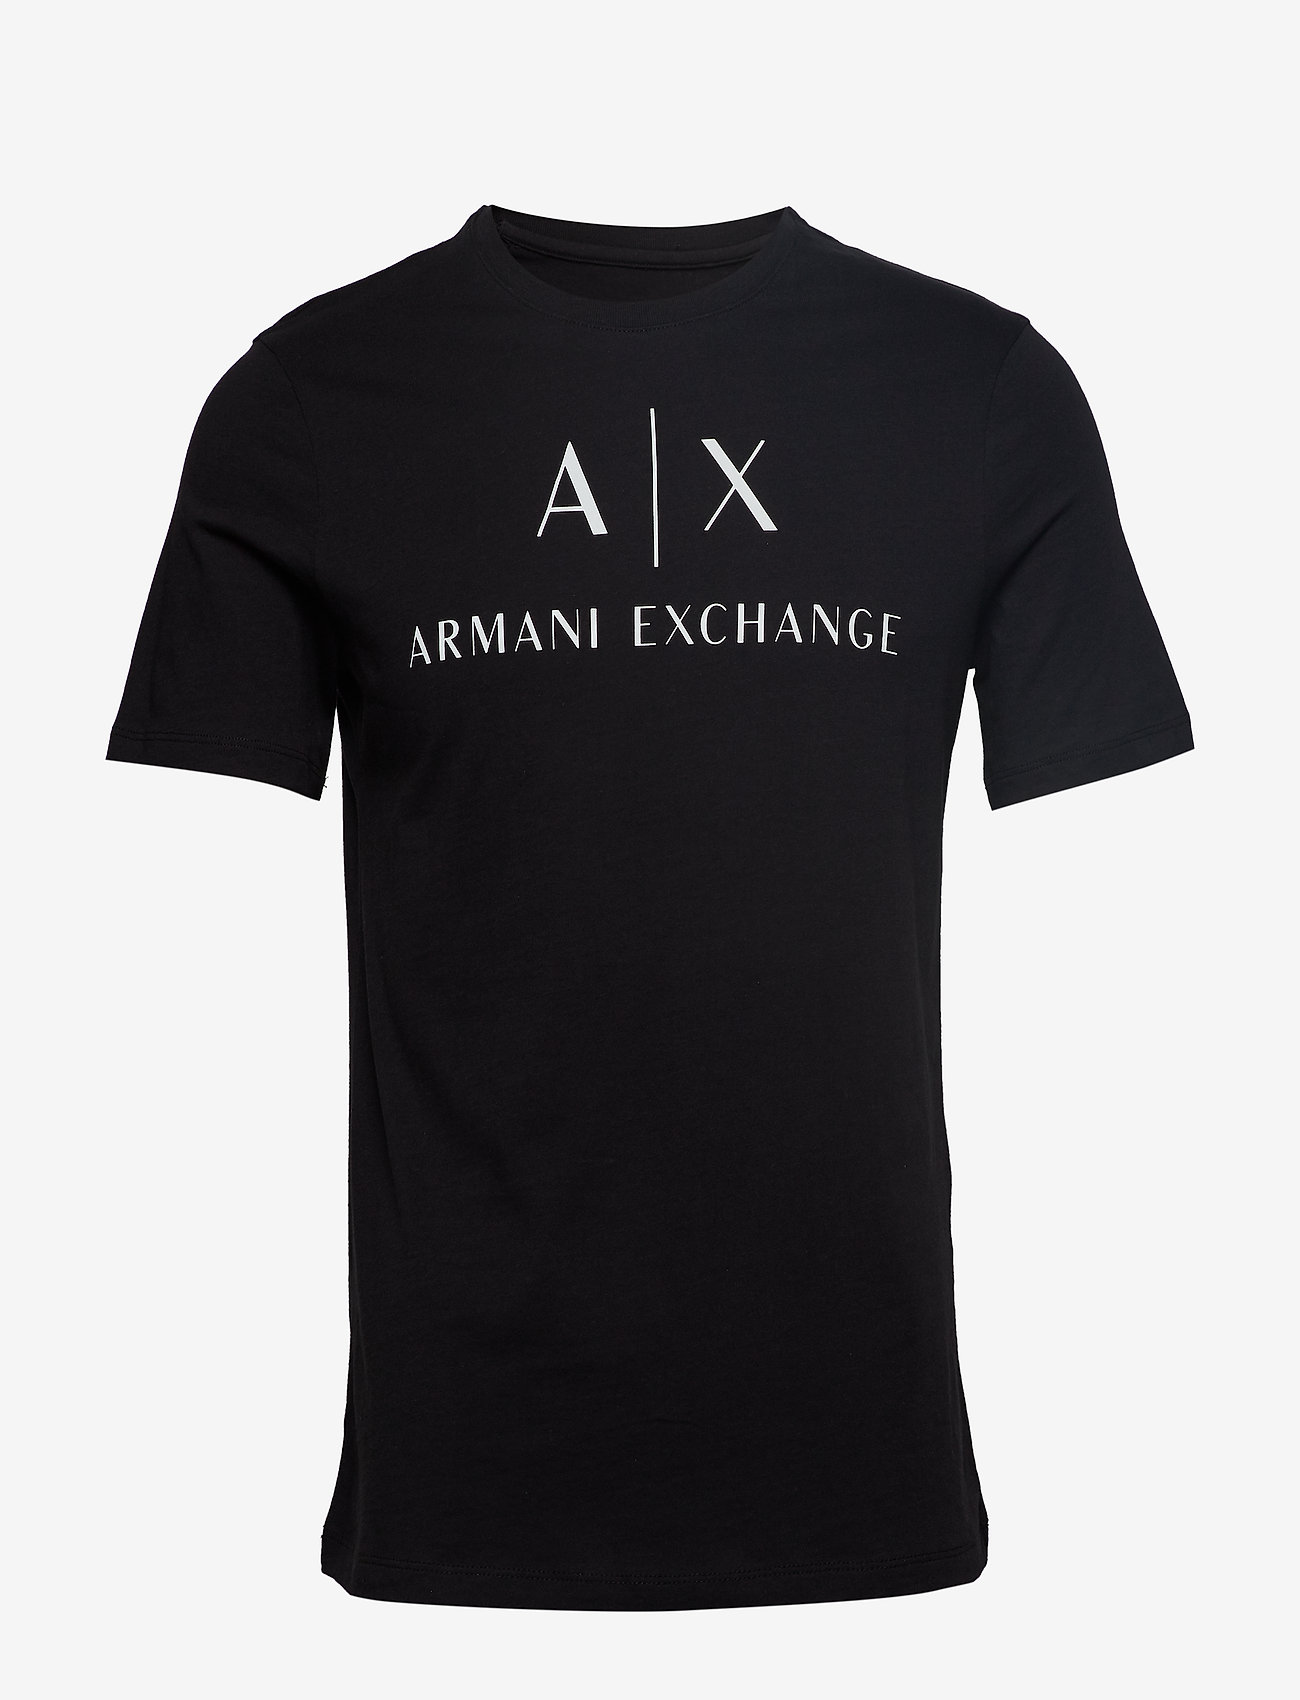 armani exchange tshirt men